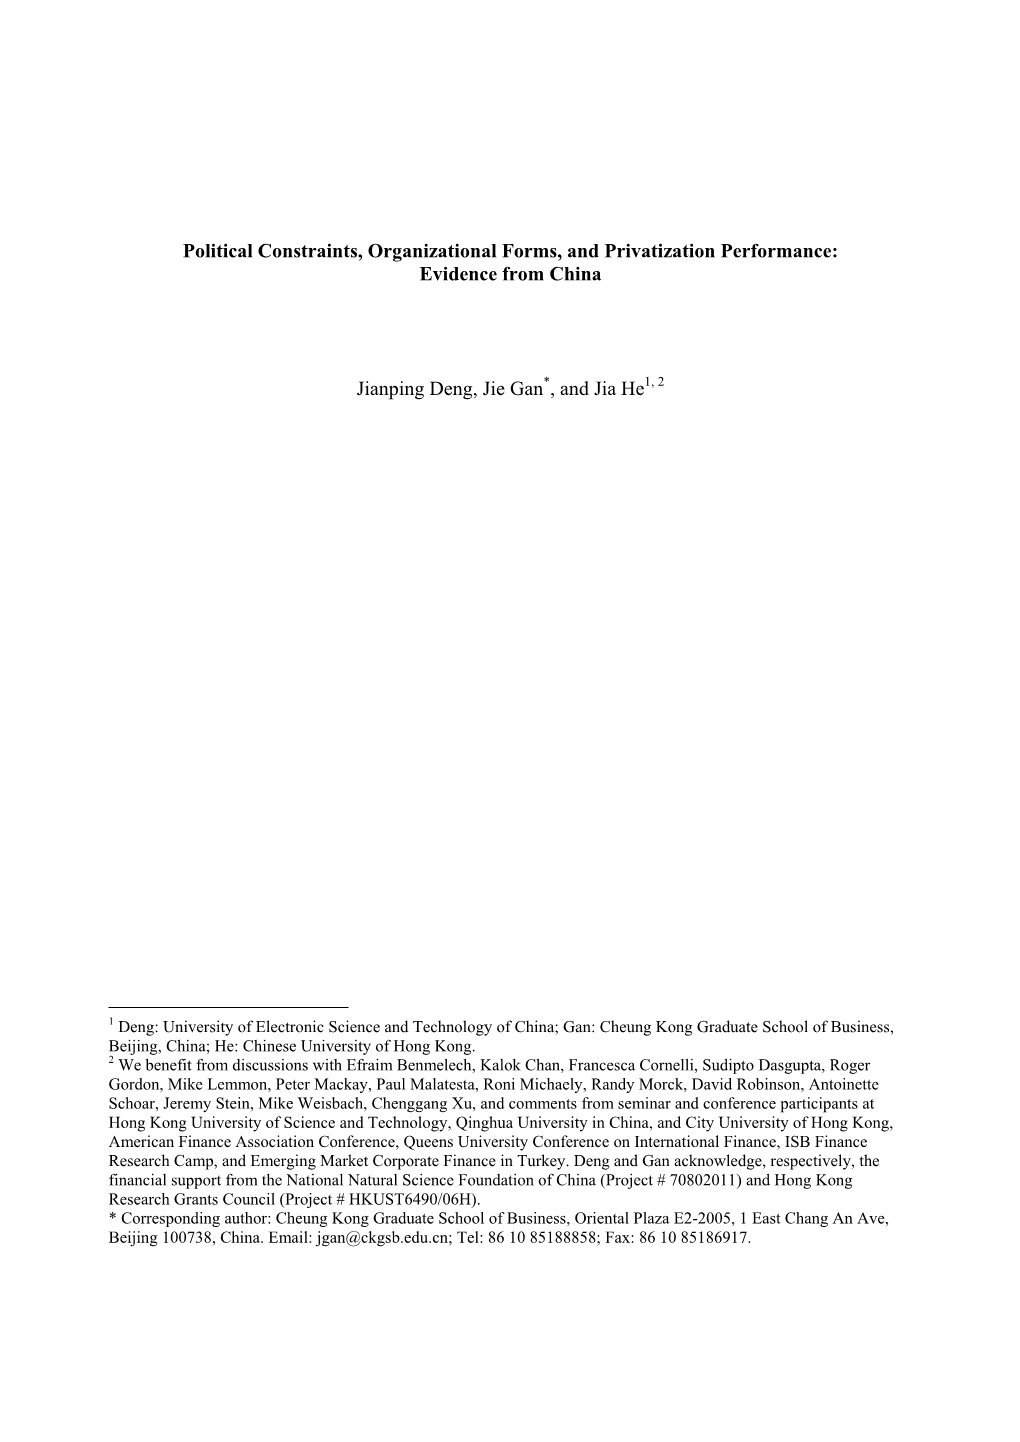 Political Constraints, Organizational Forms, and Privatization Performance: Evidence from China Jianping Deng, Jie Gan*, and Ji